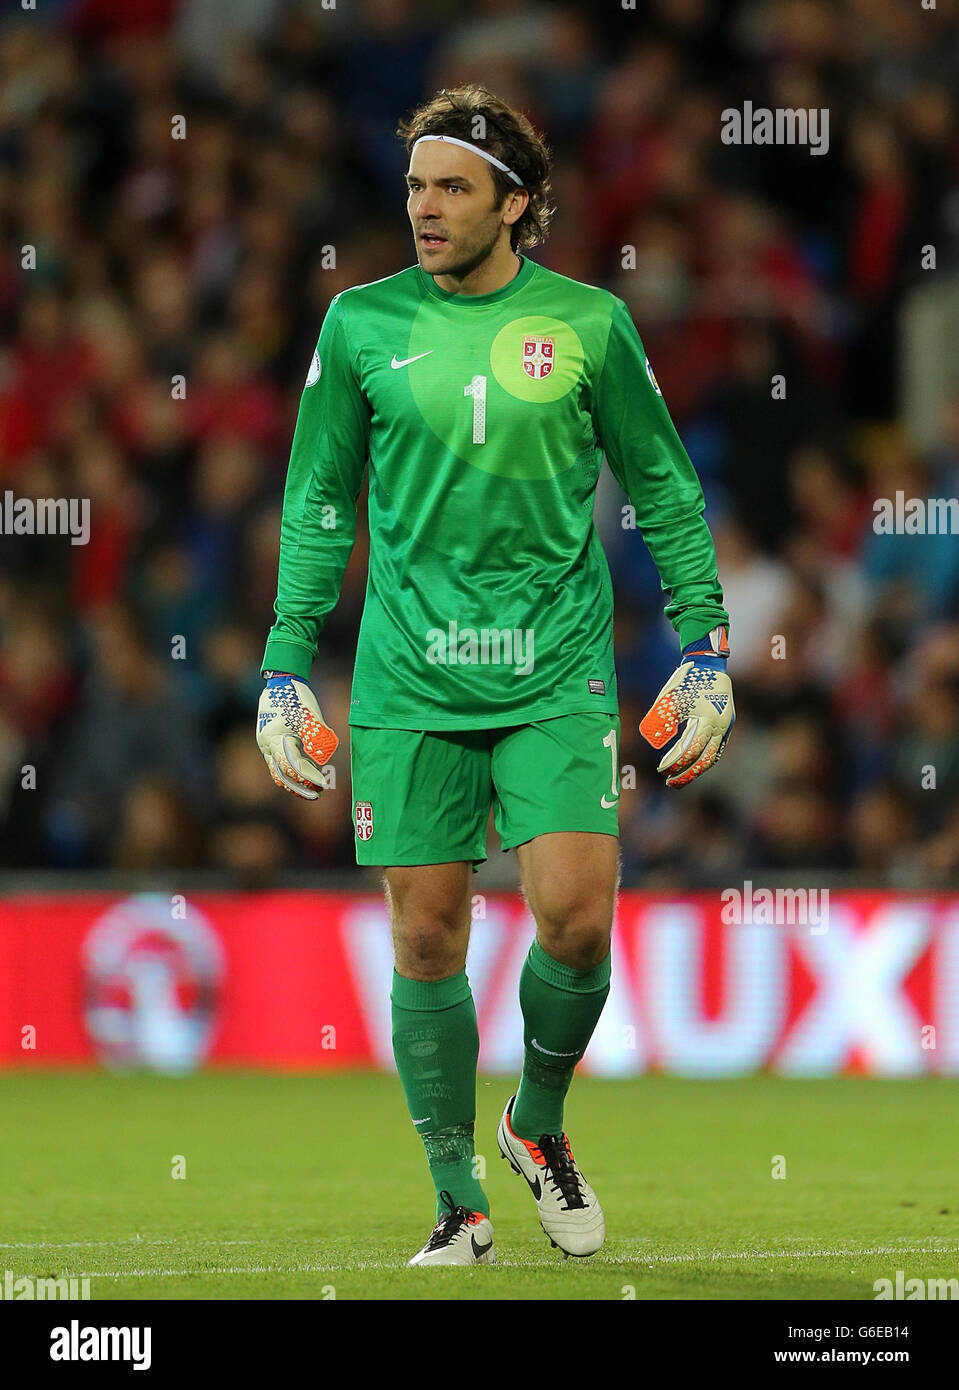 Serbia goalkeeper immagini e fotografie stock ad alta risoluzione - Alamy